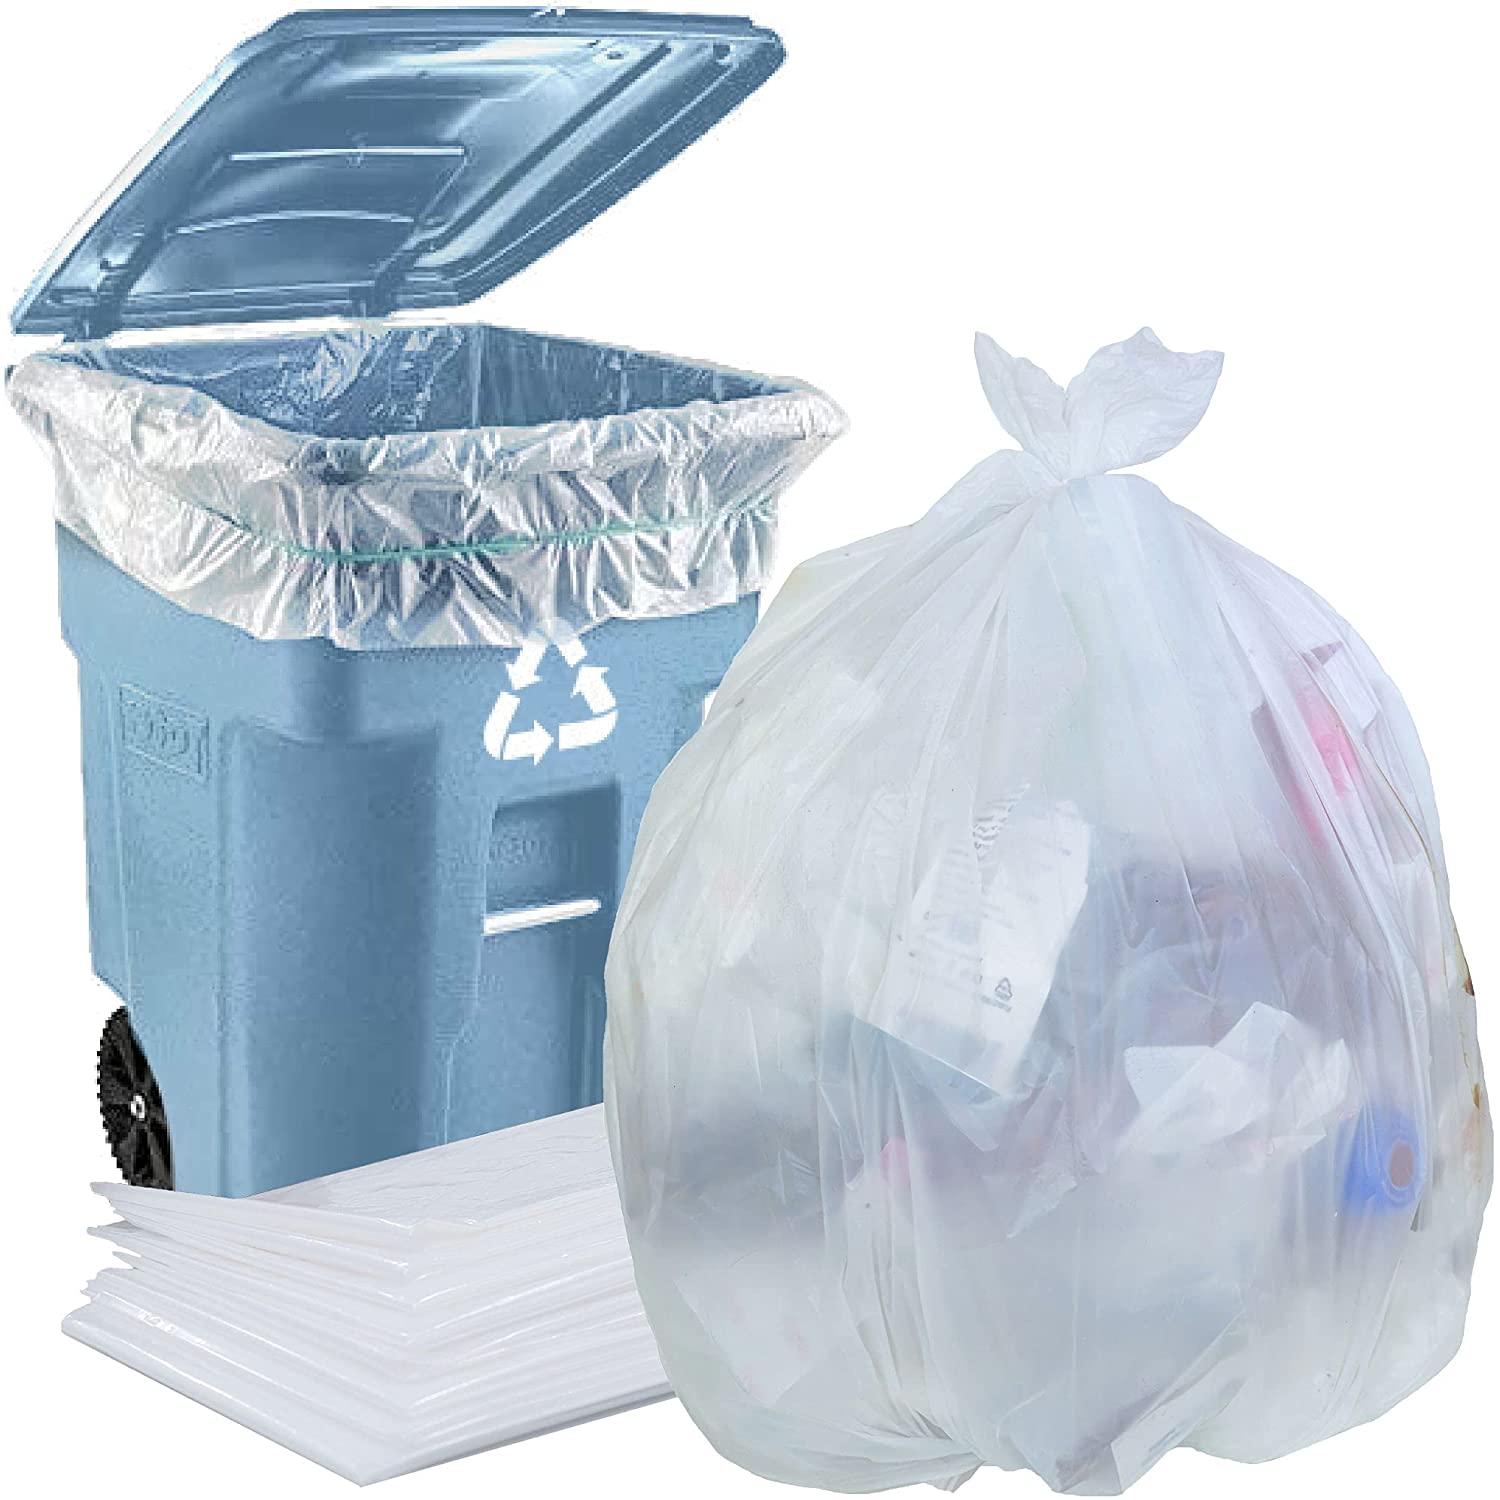 Plasticplace 65 gallon Trash Bags │ 1.5 Mil │ Clear Heavy Duty